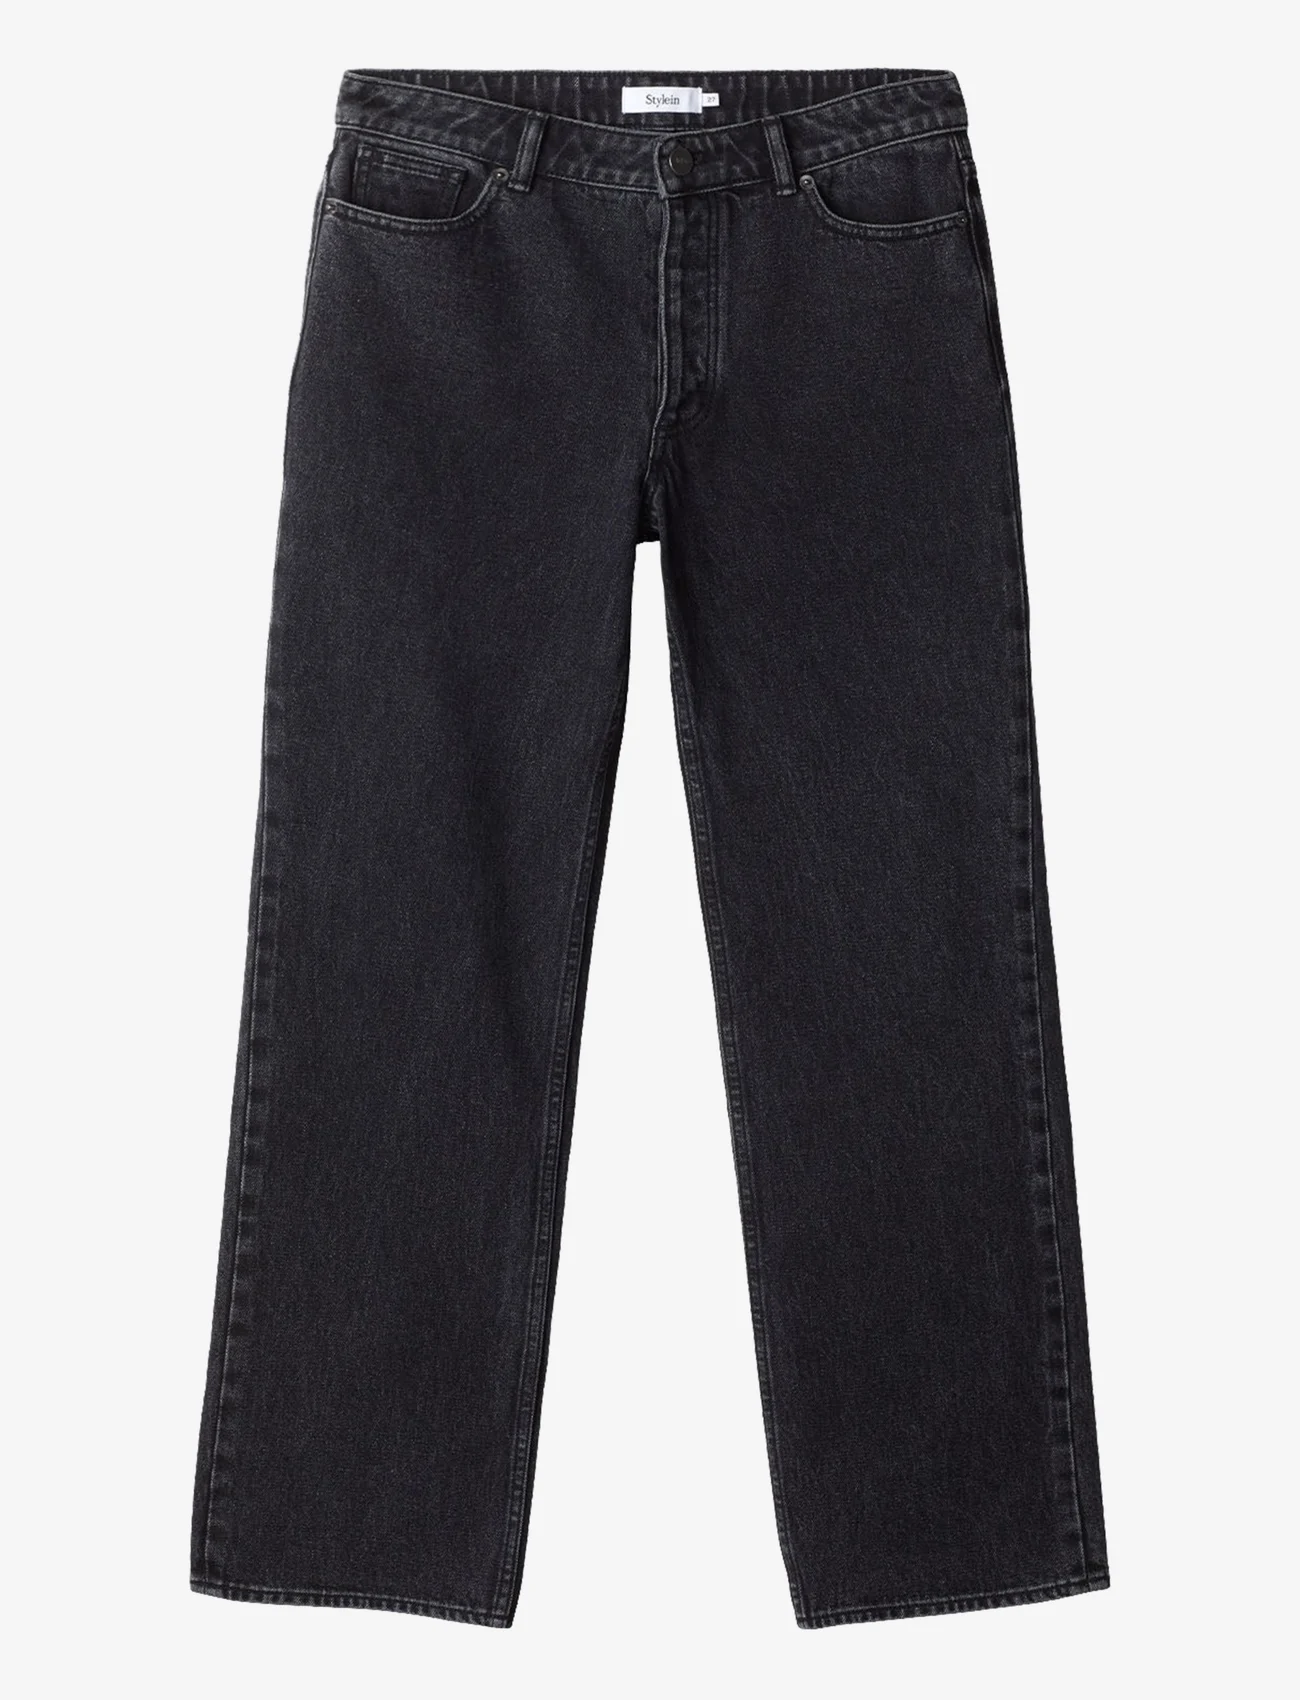 Stylein - KIM DENIM - brede jeans - black - 0